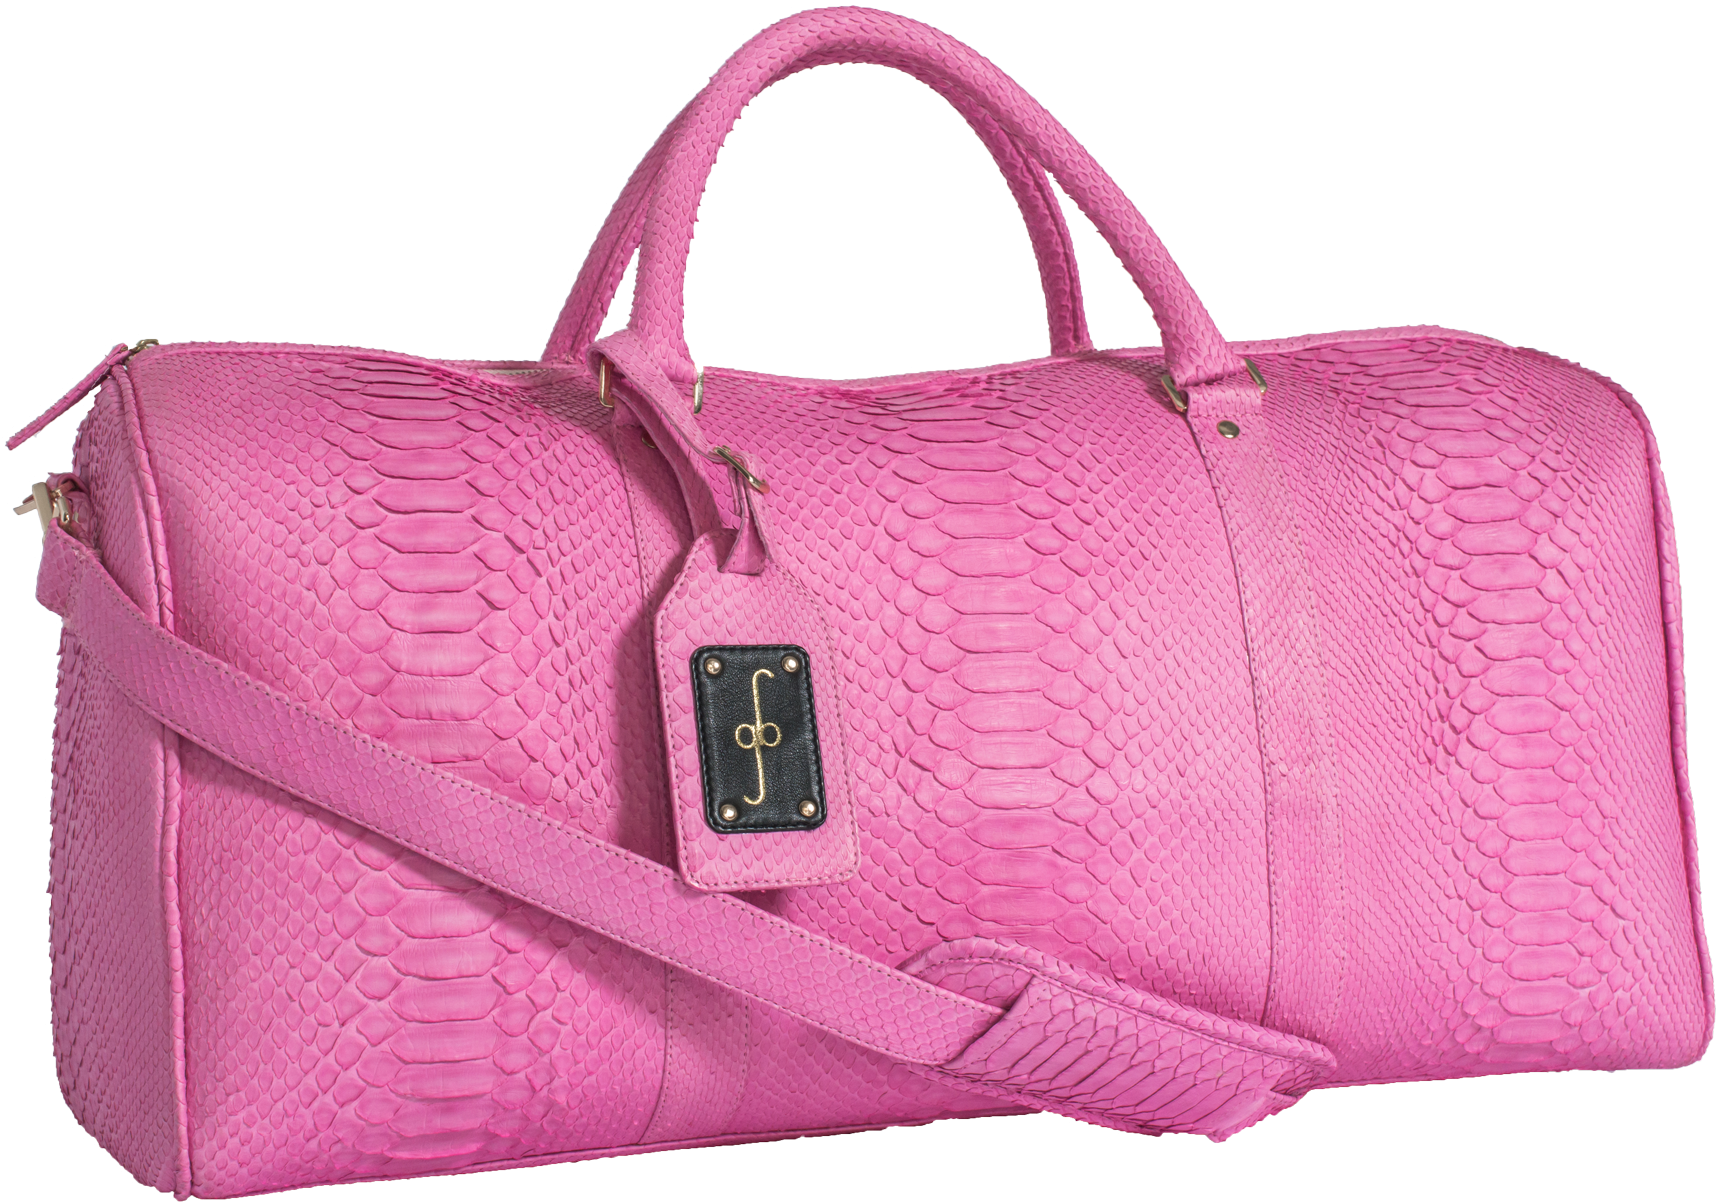 Download PNG image - Pink Handbag PNG Photos 